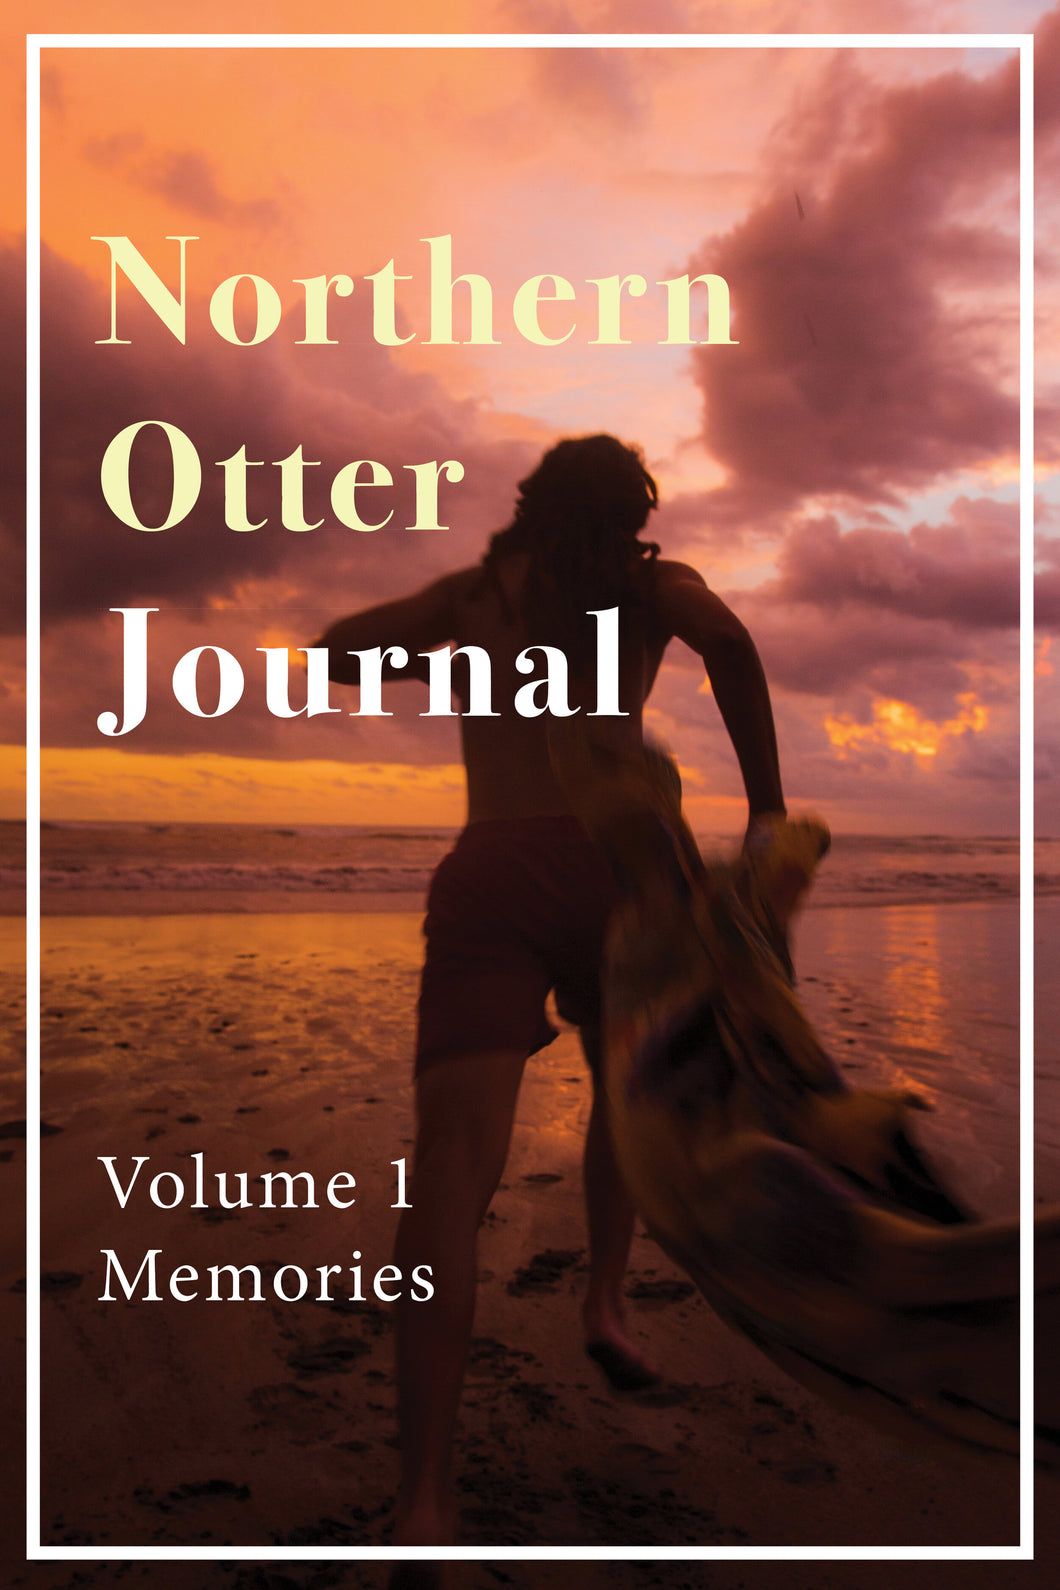 Northern Otter Journal Vol. 1: Memories